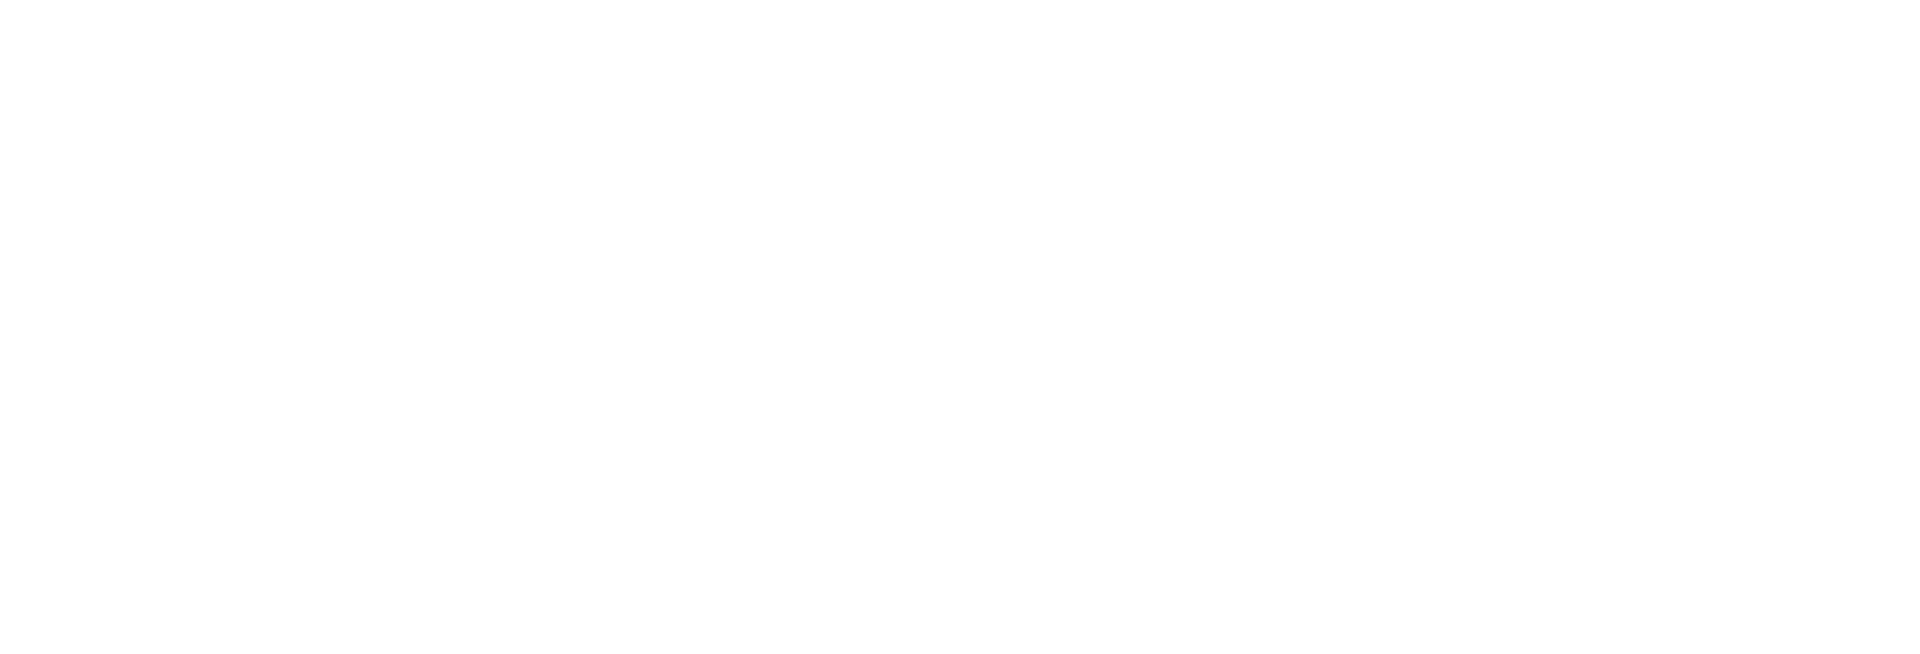 PKNY Pictures